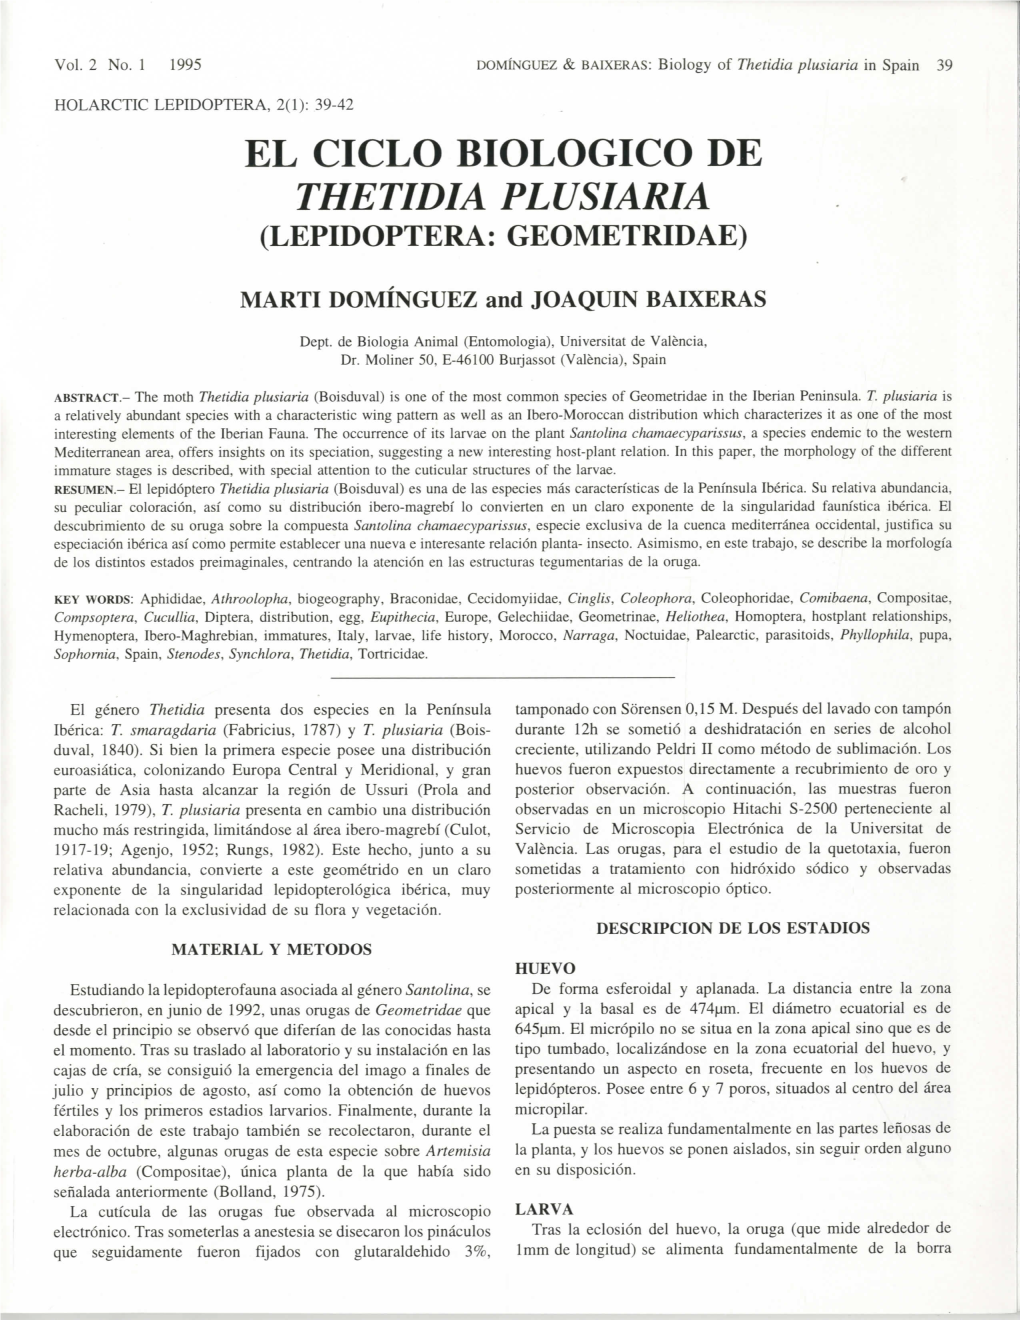 El Ciclo Biologico De Thetidia Plusiaria (Lepidoptera: Geometridae)